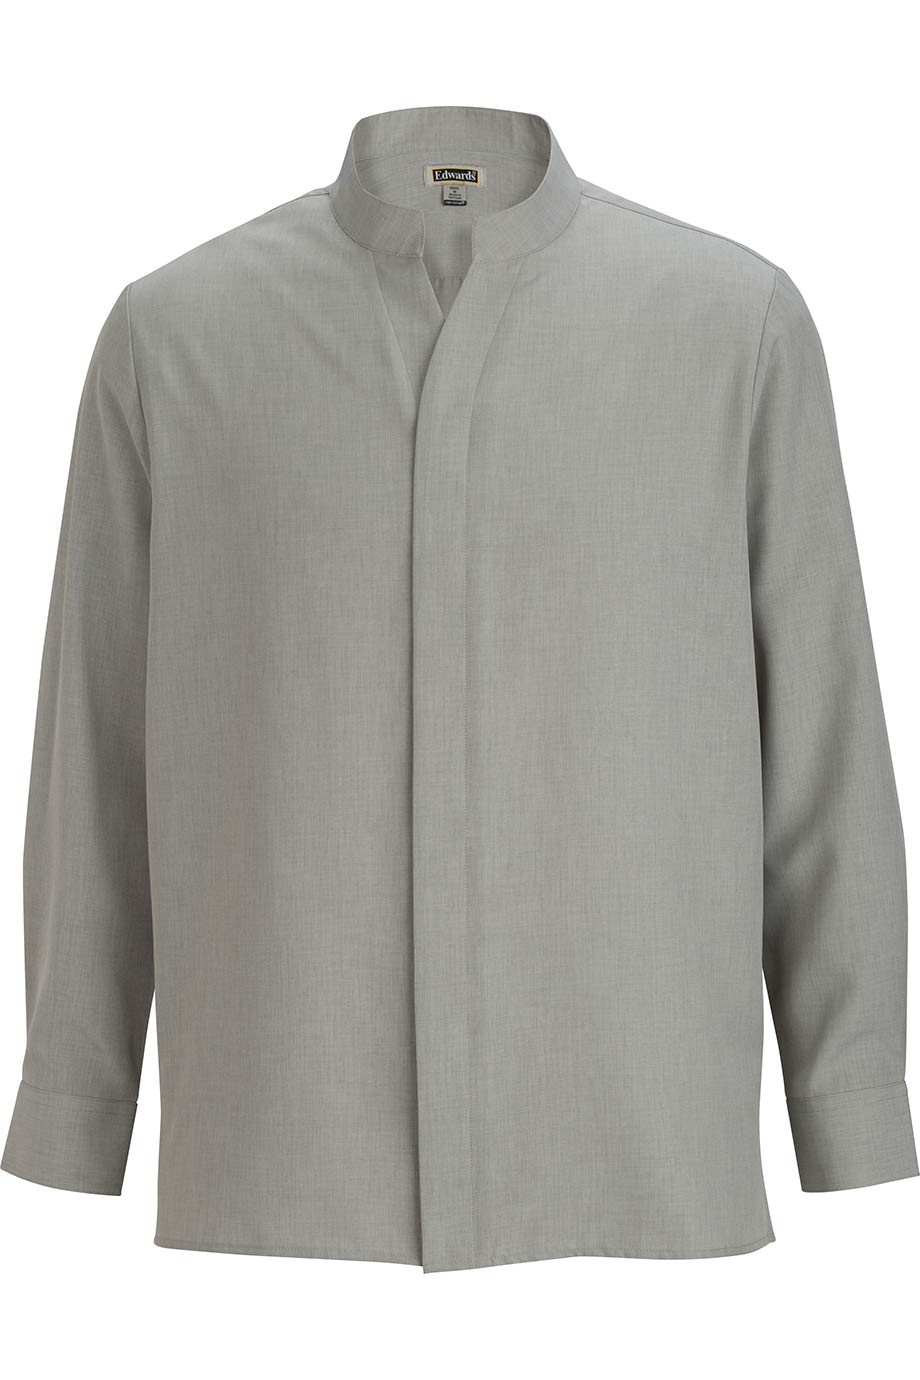 STAND-UP COLLAR BATISTE SHIRT | Edwards Garment